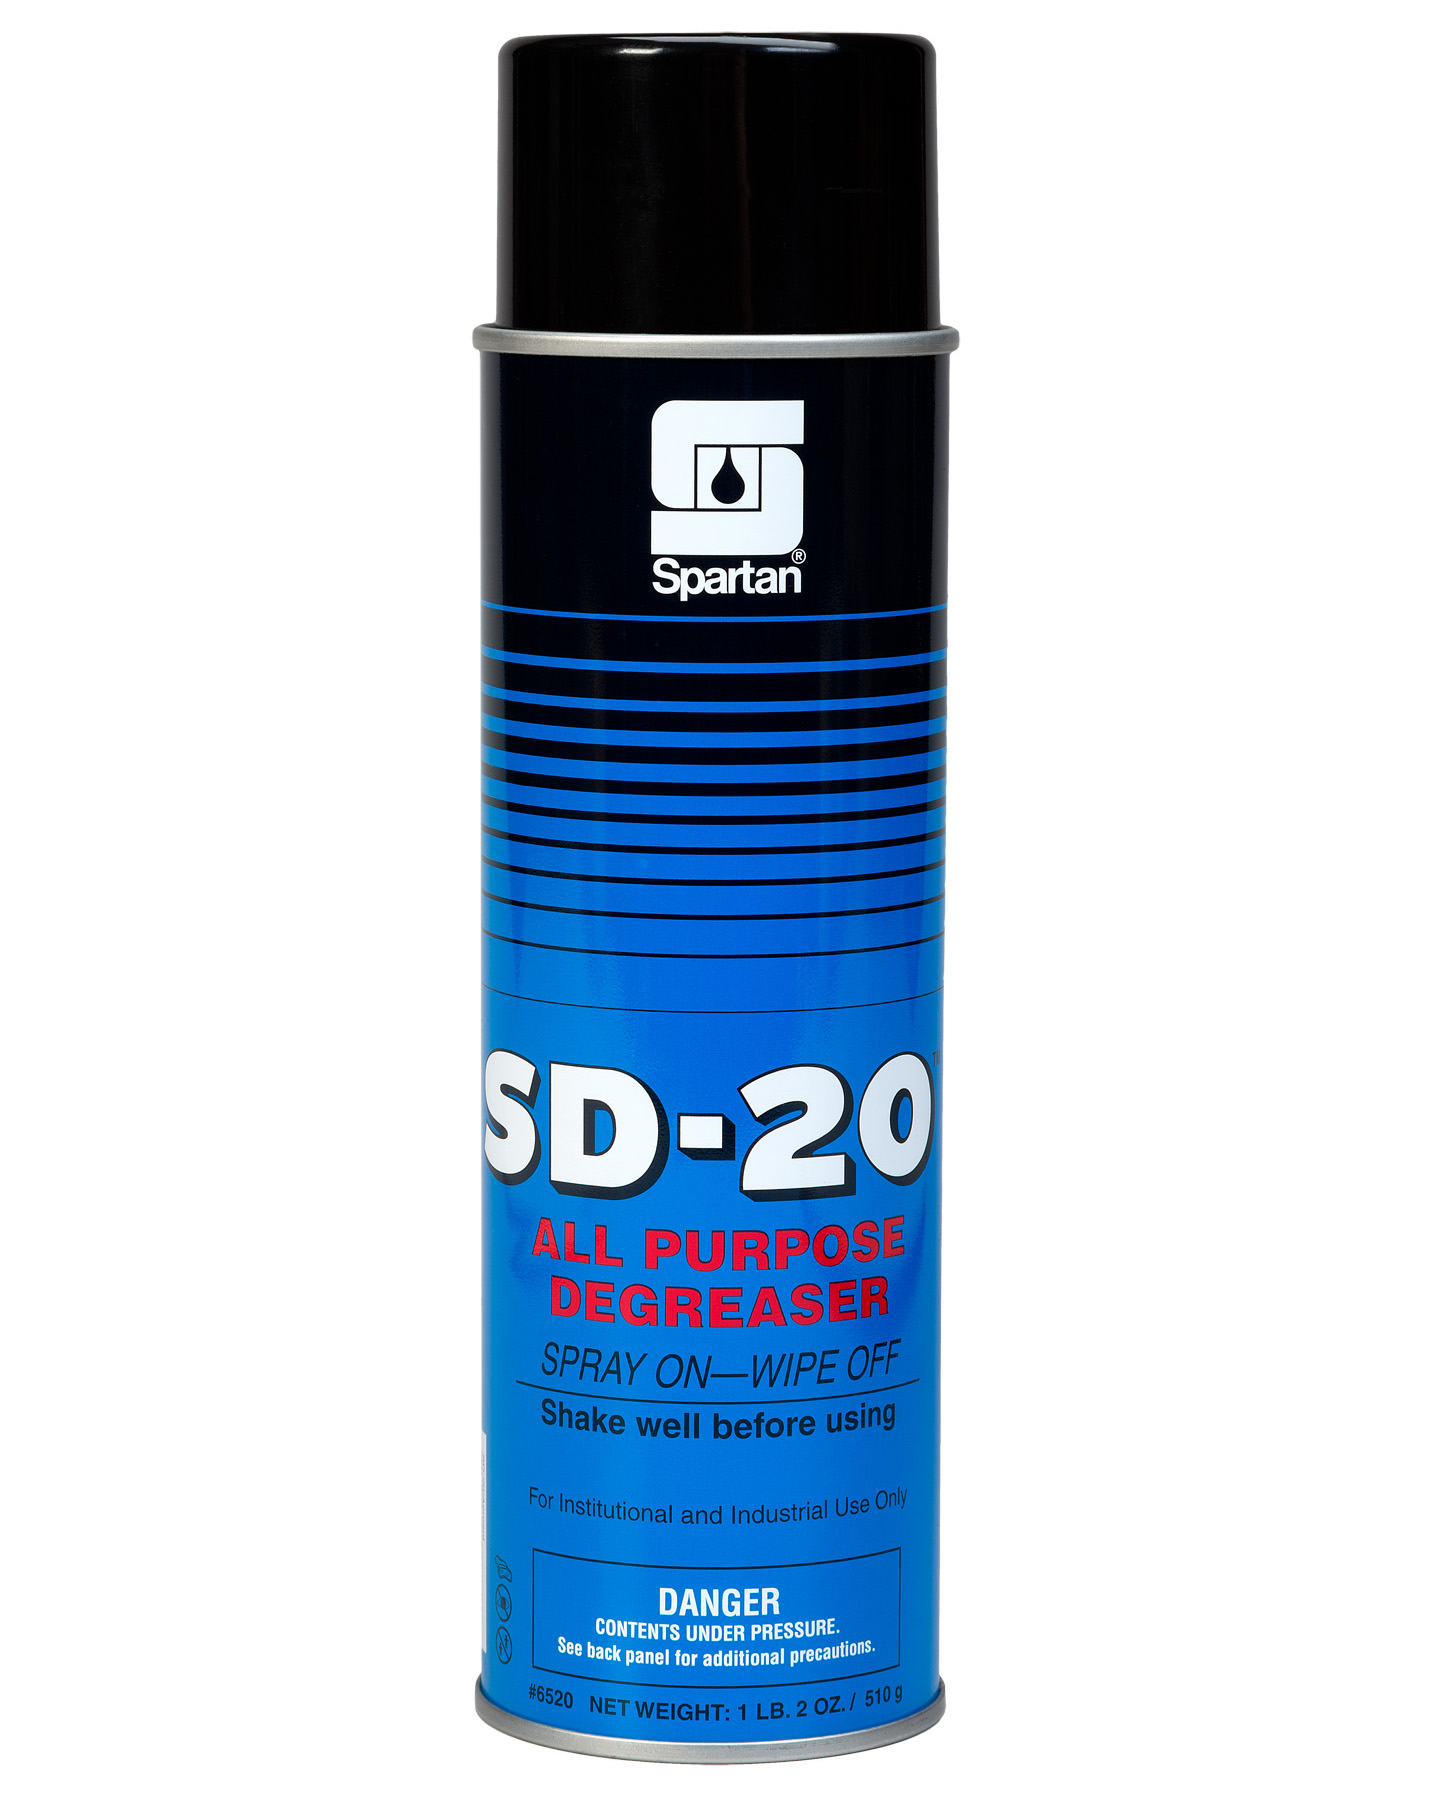 HDi SD-20